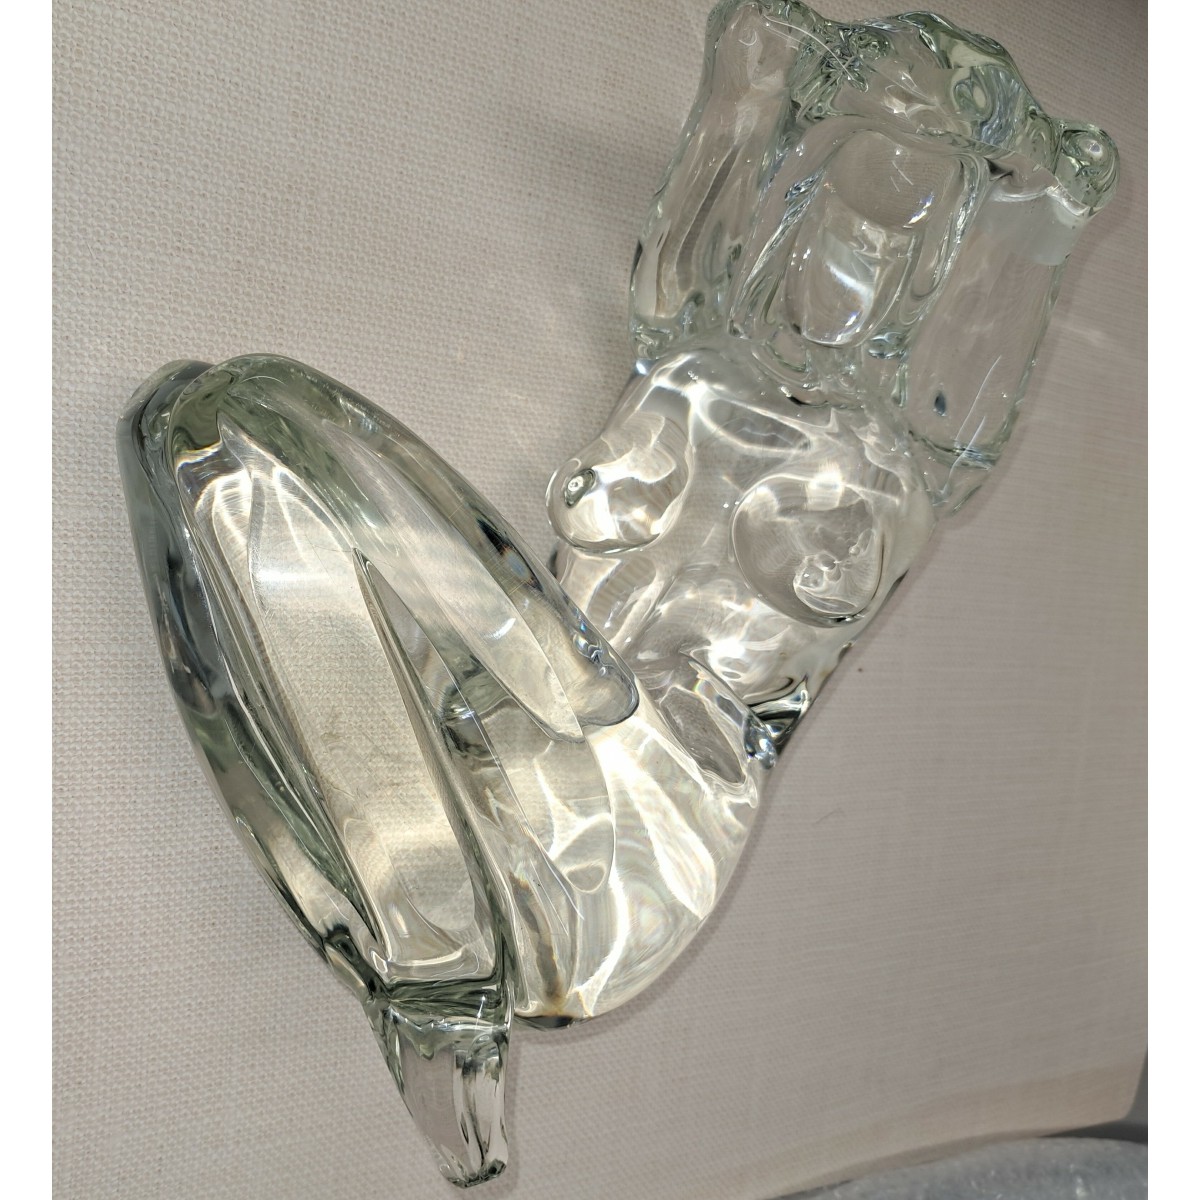 Loredano Rosin, Italian (1936 - 1992) Art Glass